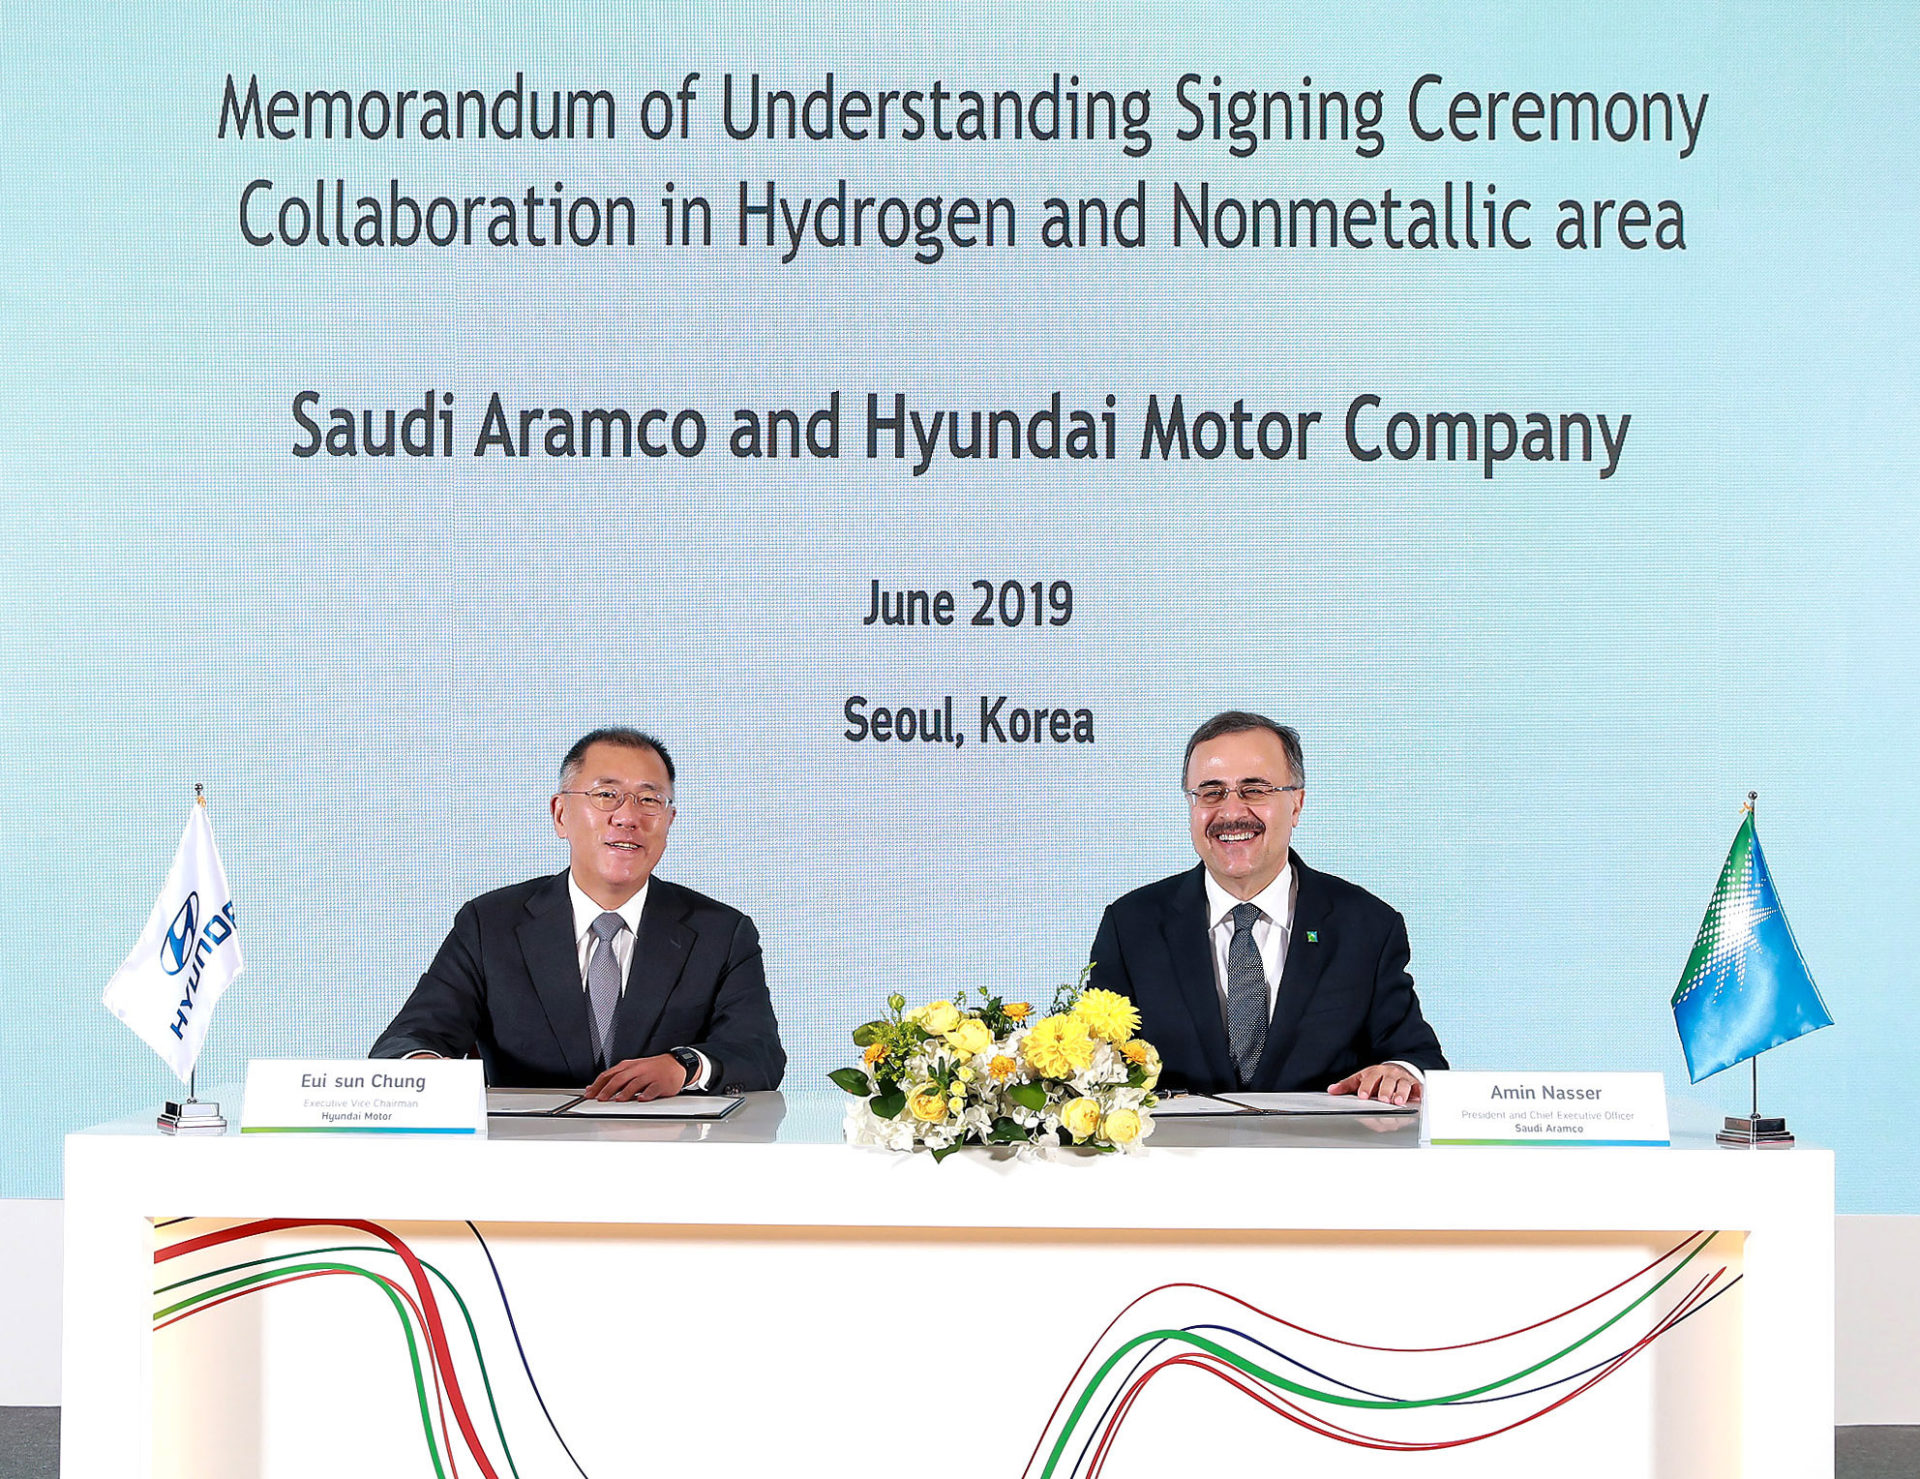 Hyundai e Saudi Aramco acordo